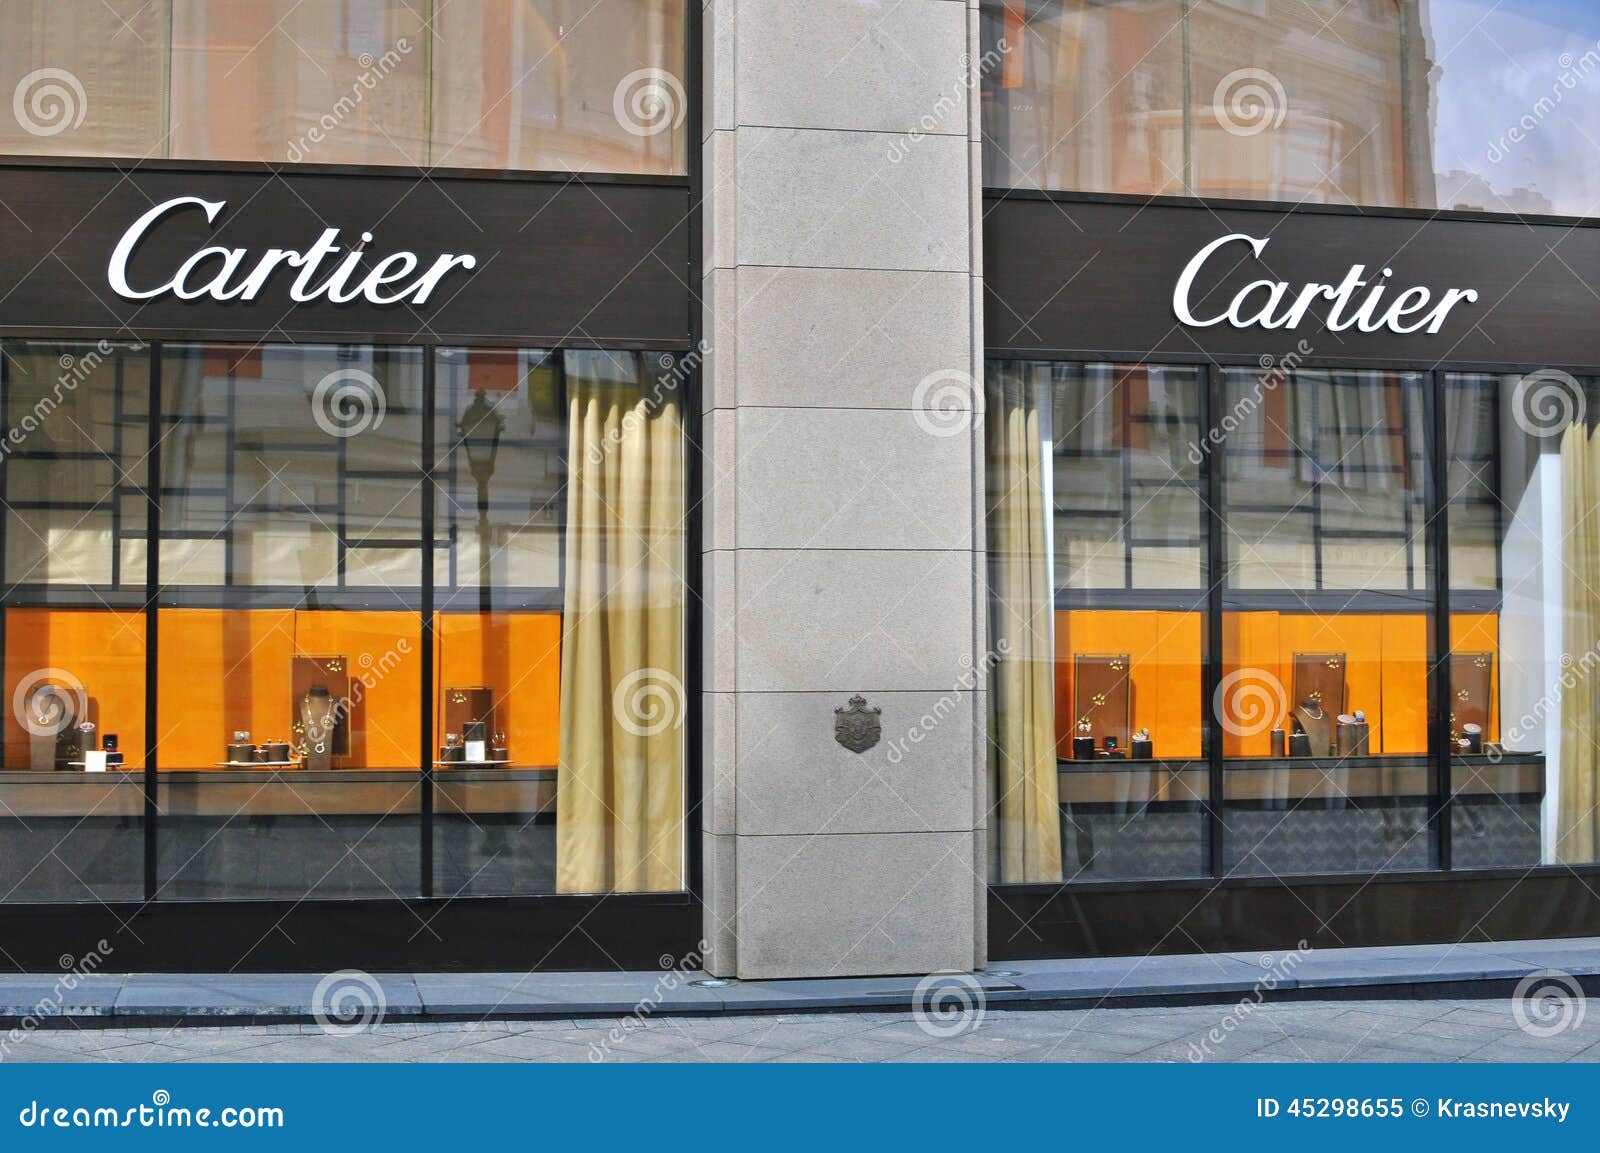 cartier company store